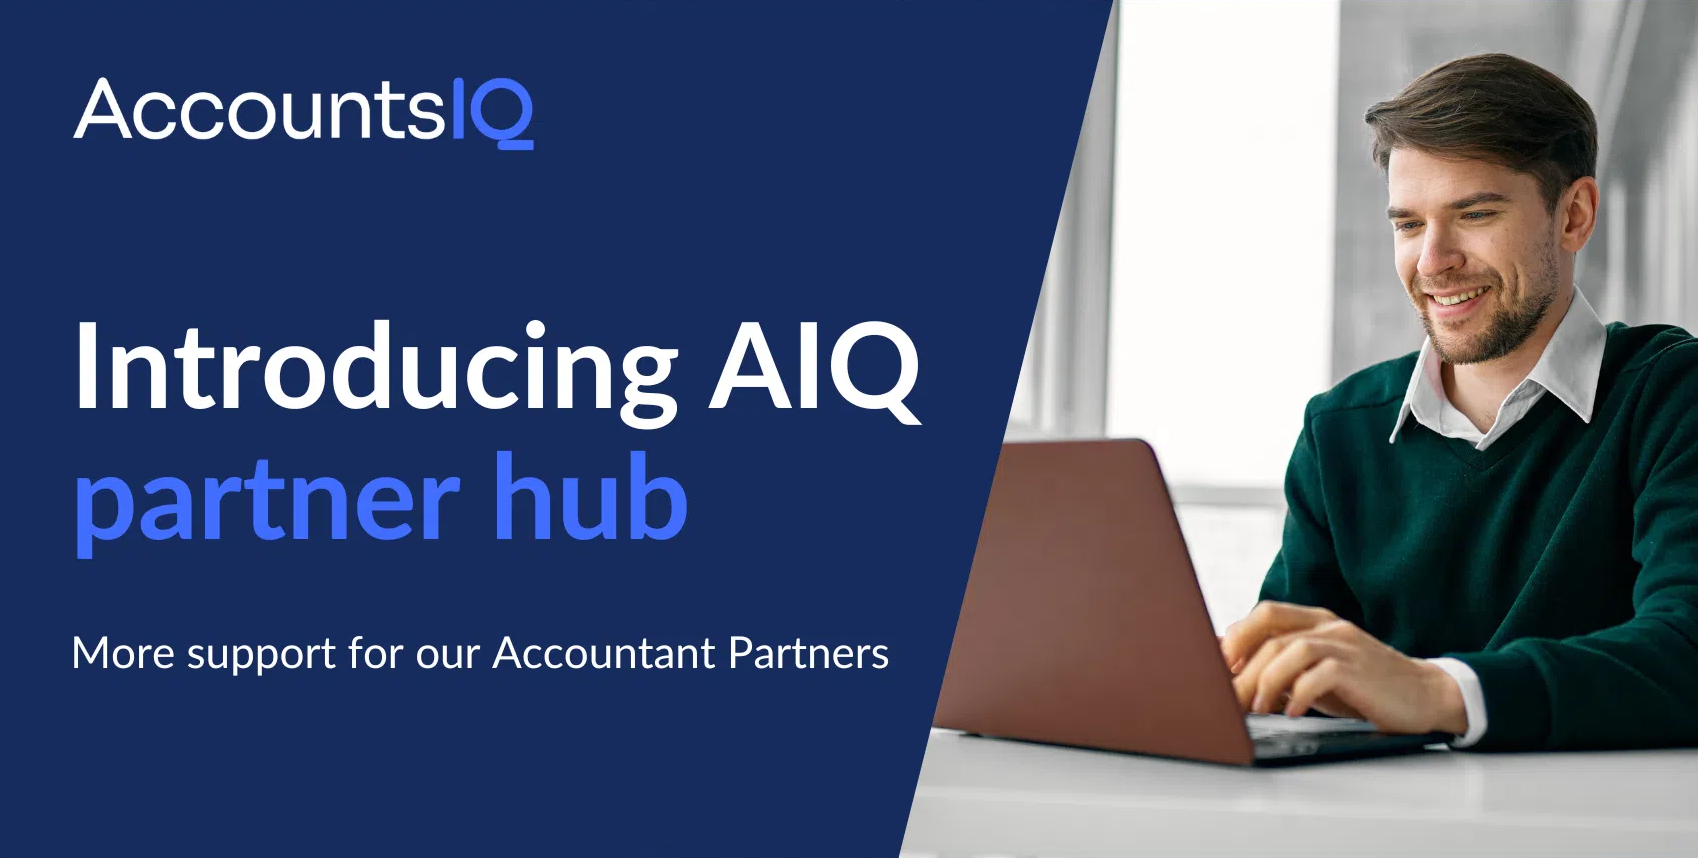 New: Partner Hub for Accountants from AccountsIQ logo